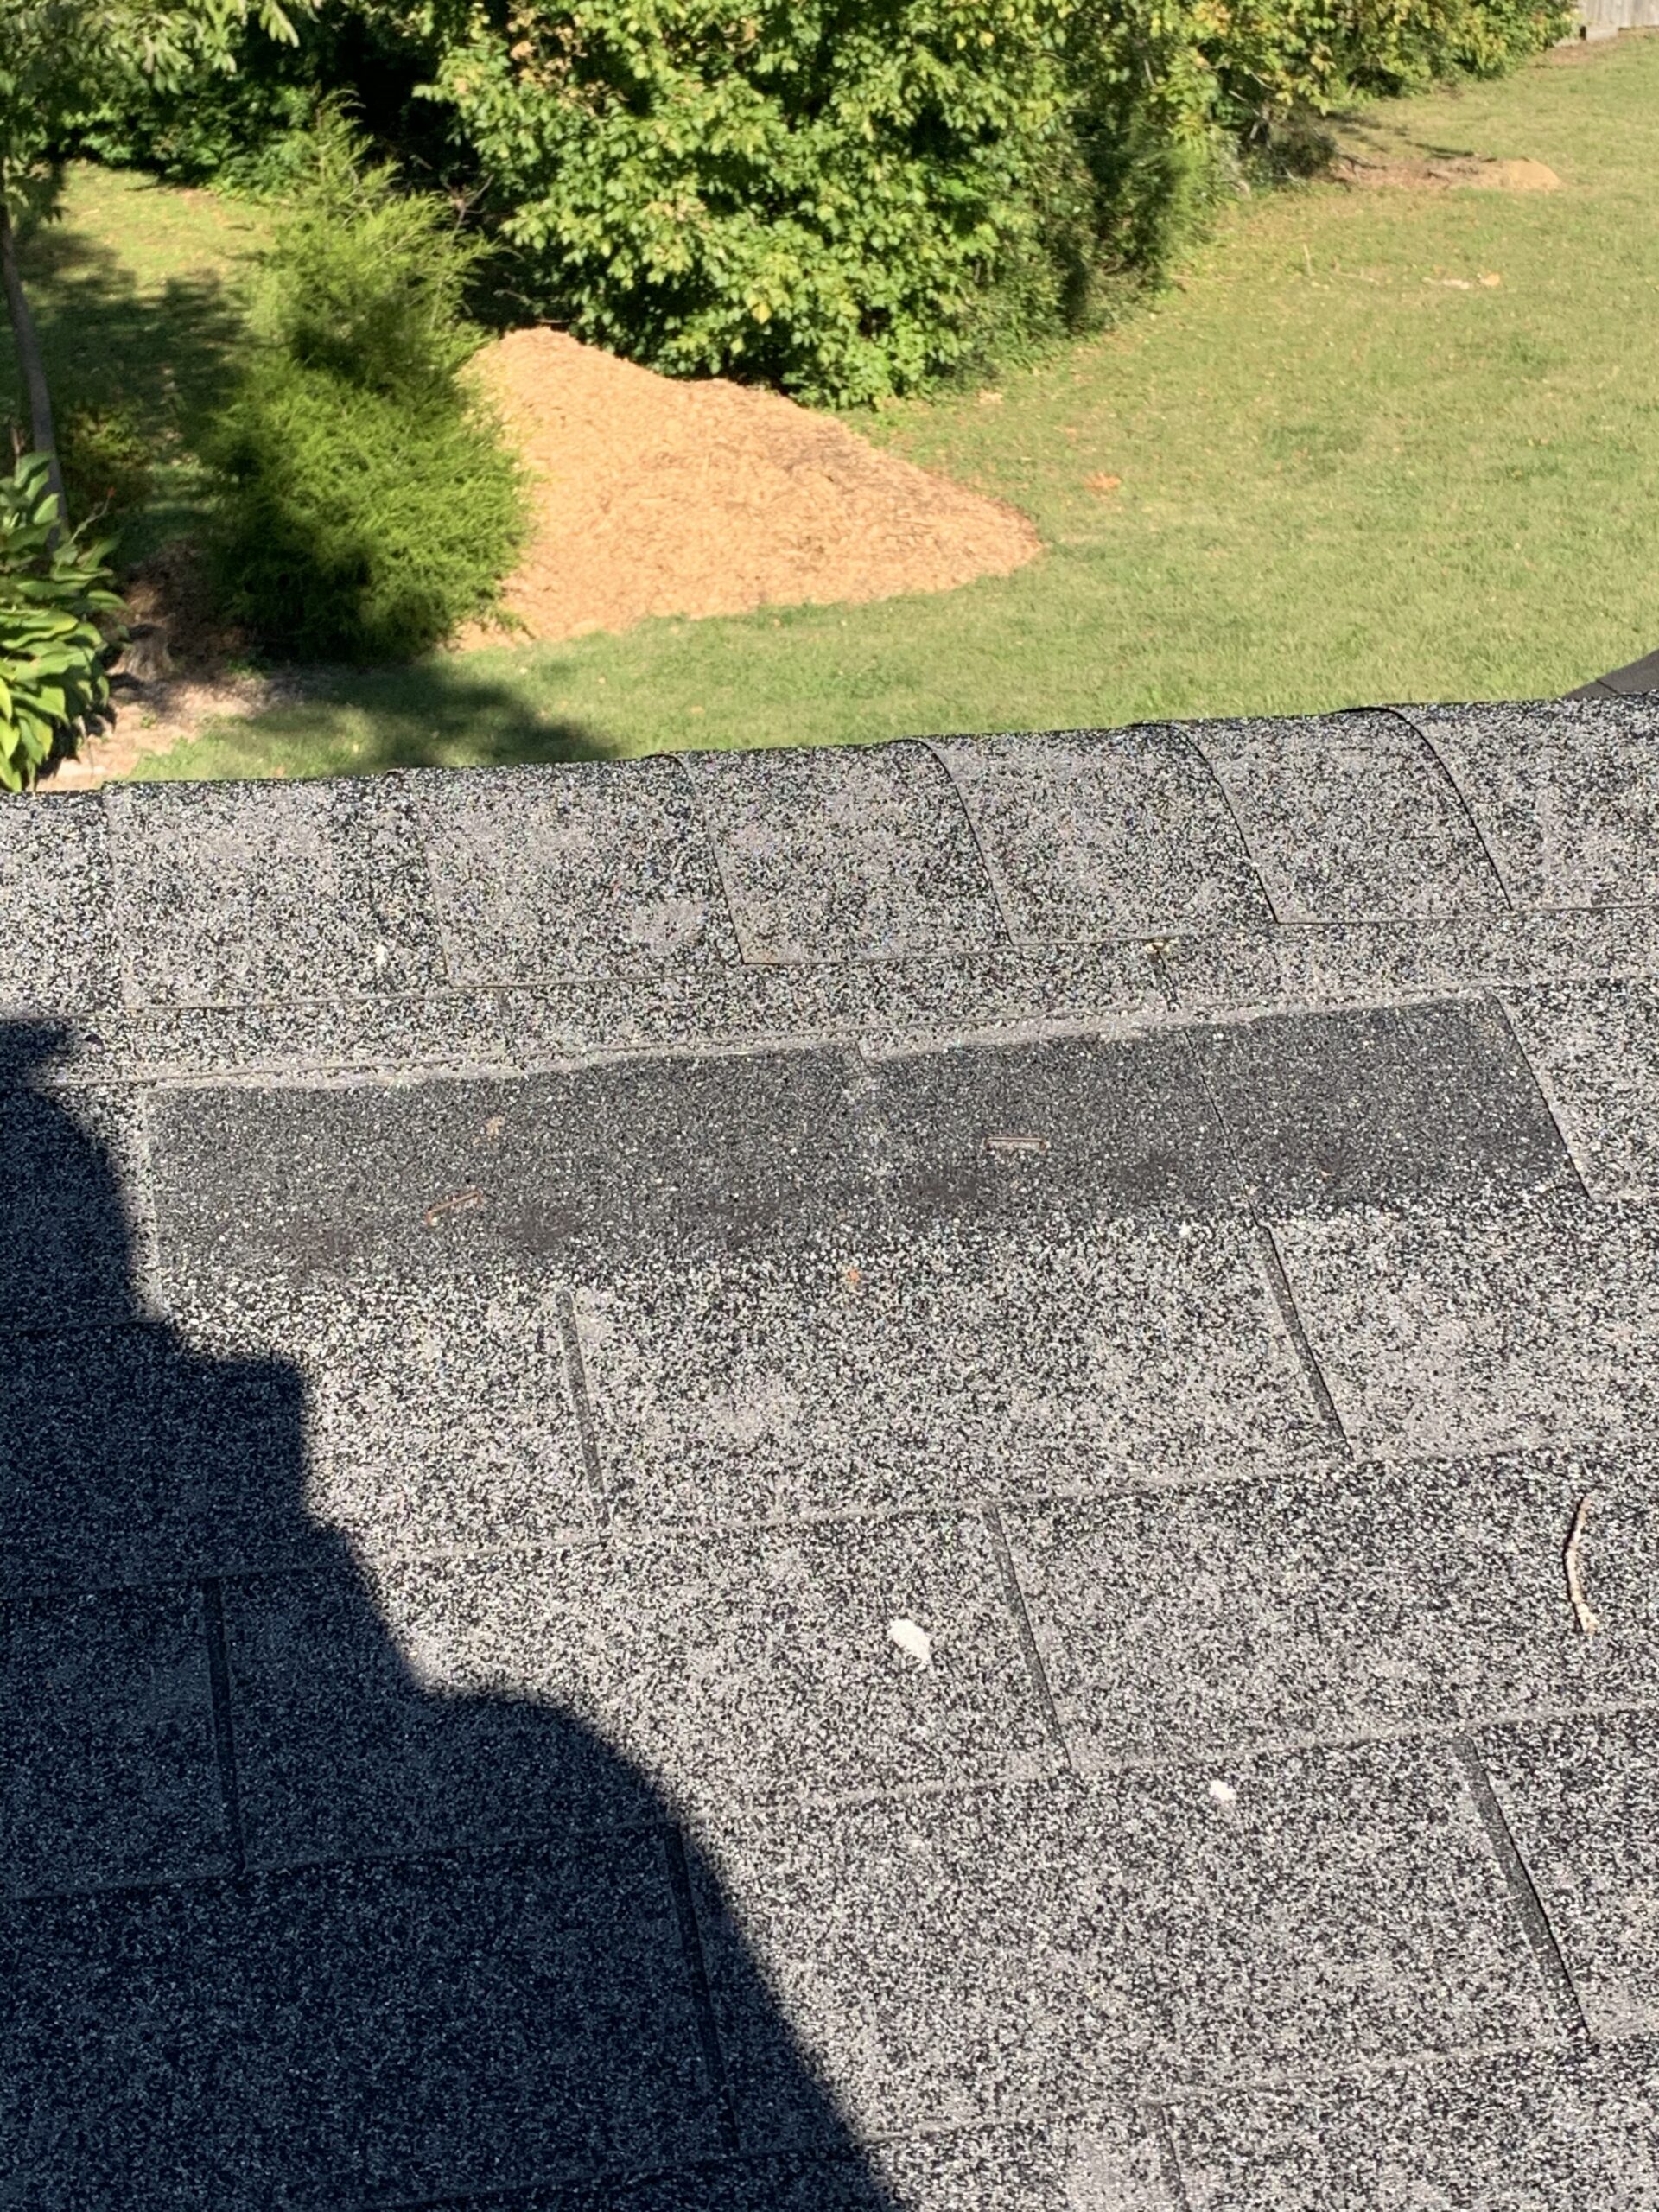 Missing shingles on residential roof